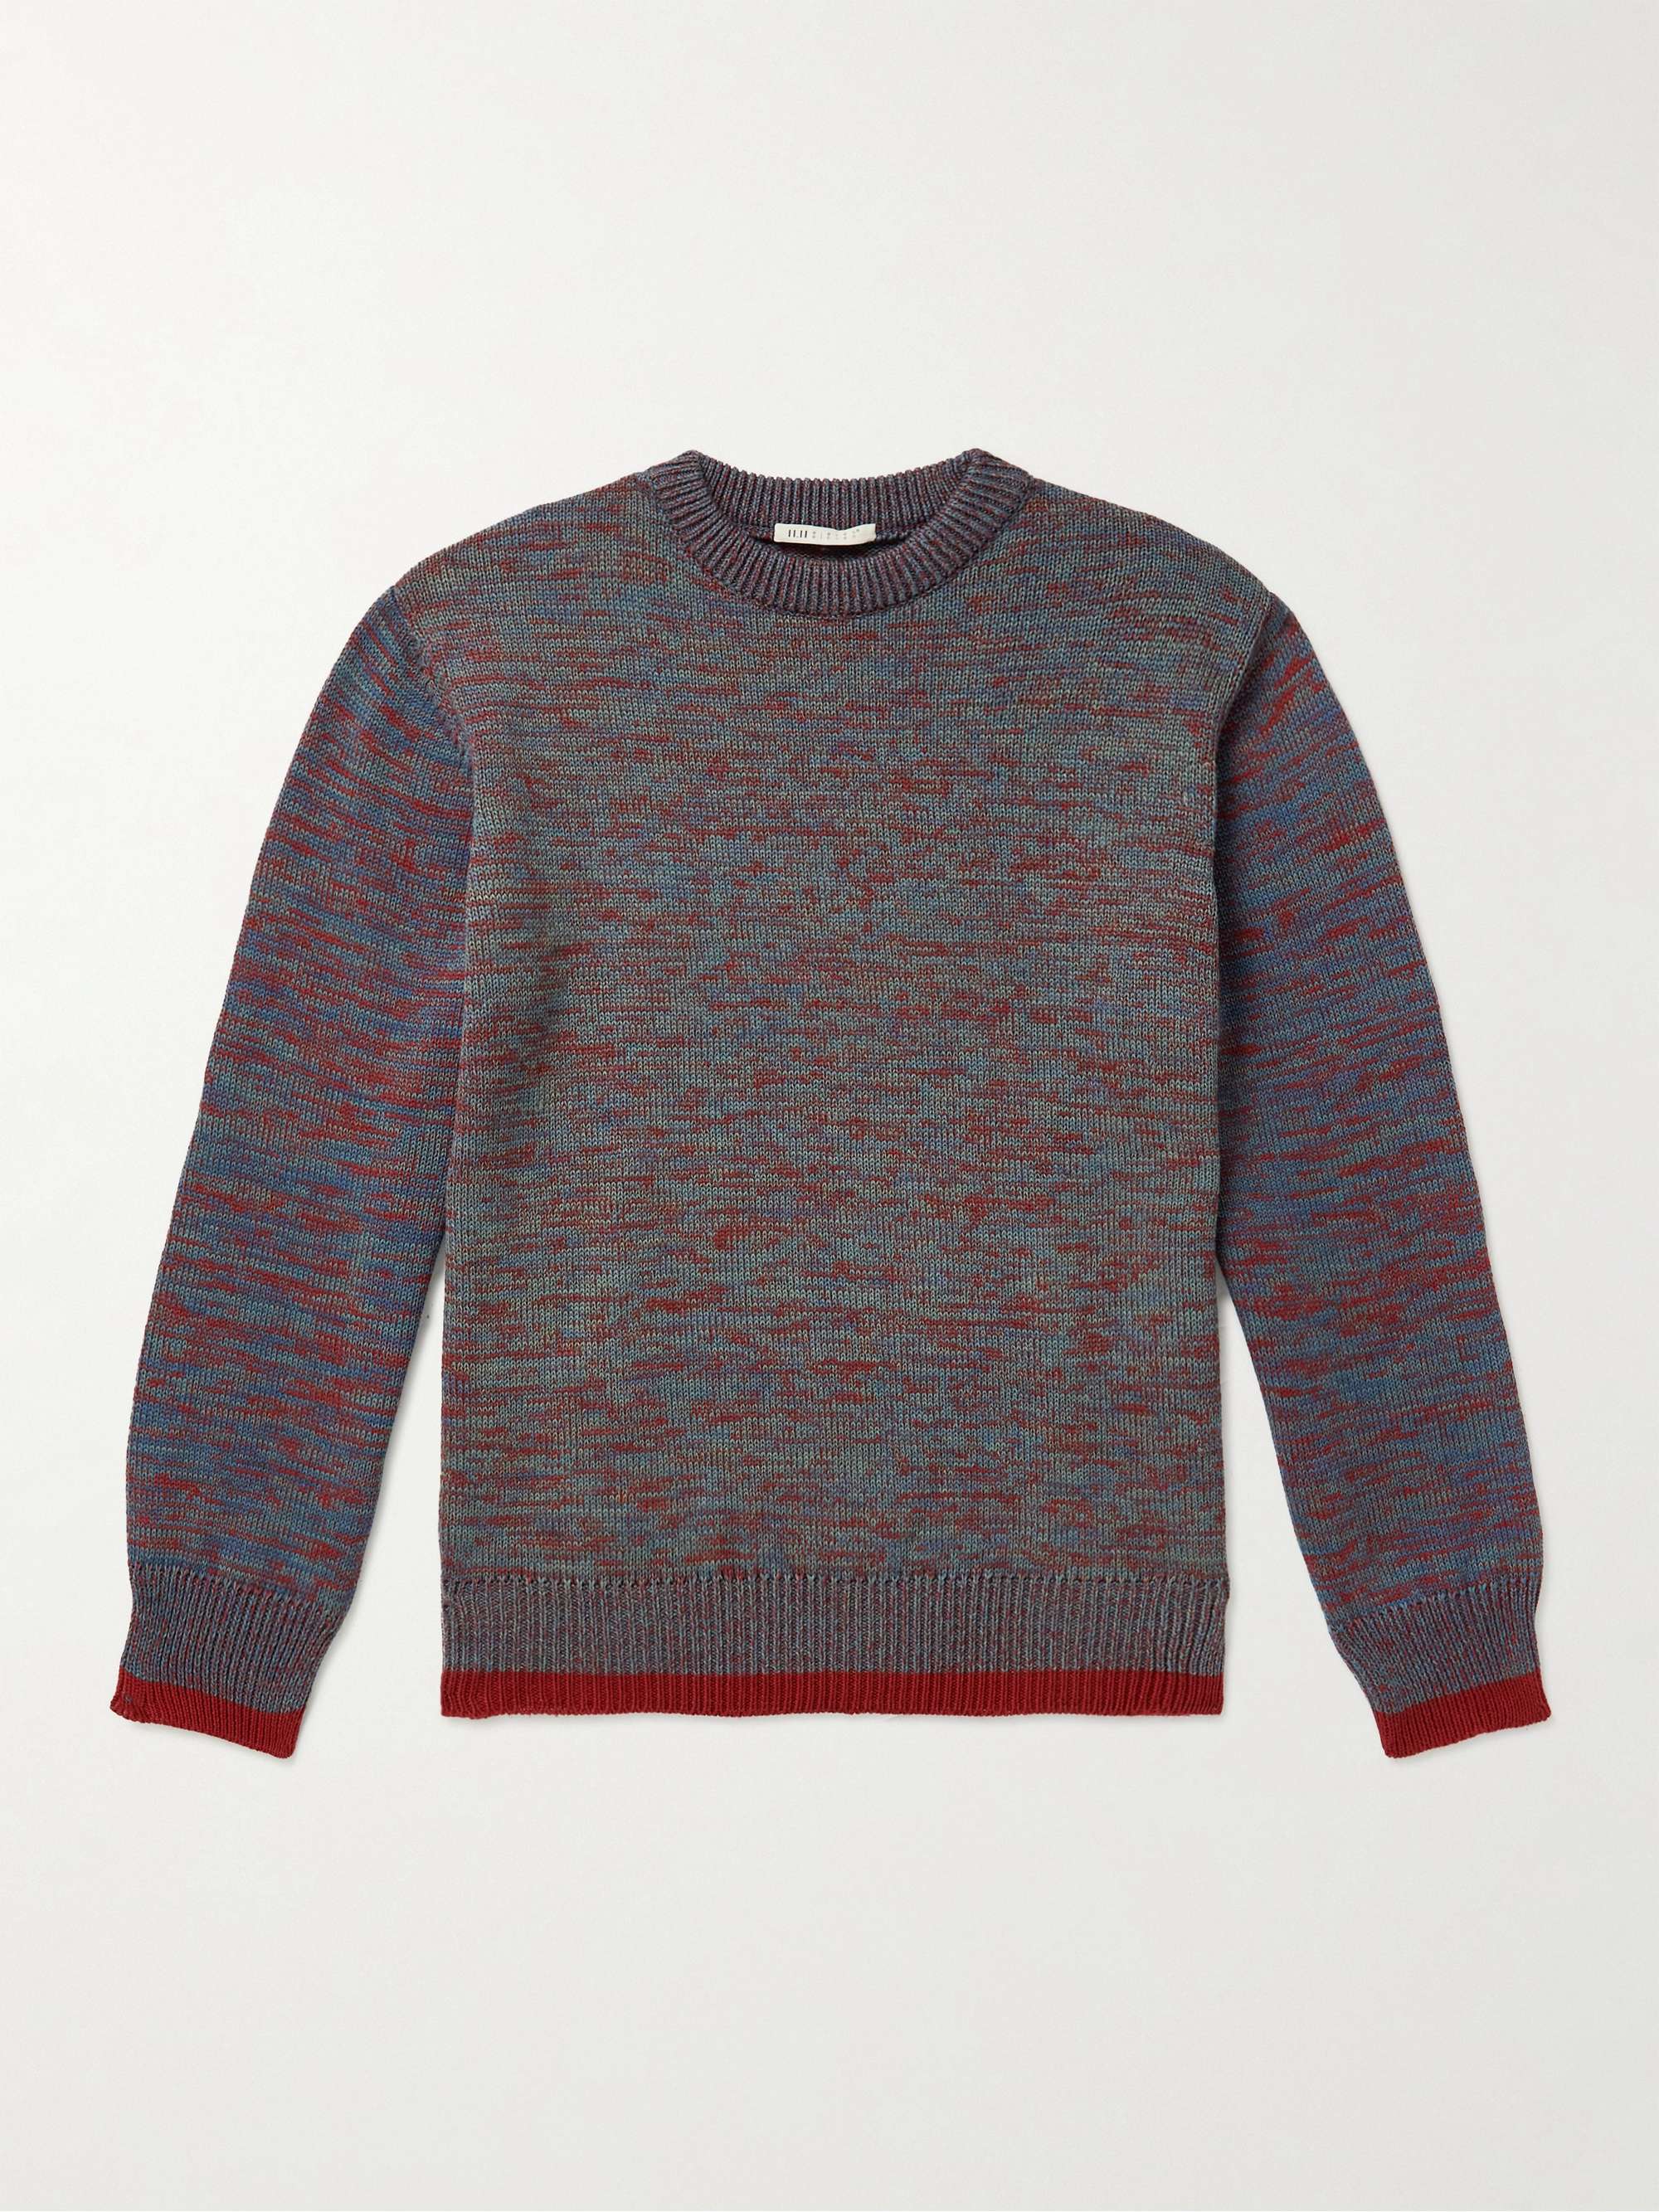 11.11/ELEVEN ELEVEN Merino Wool Sweater